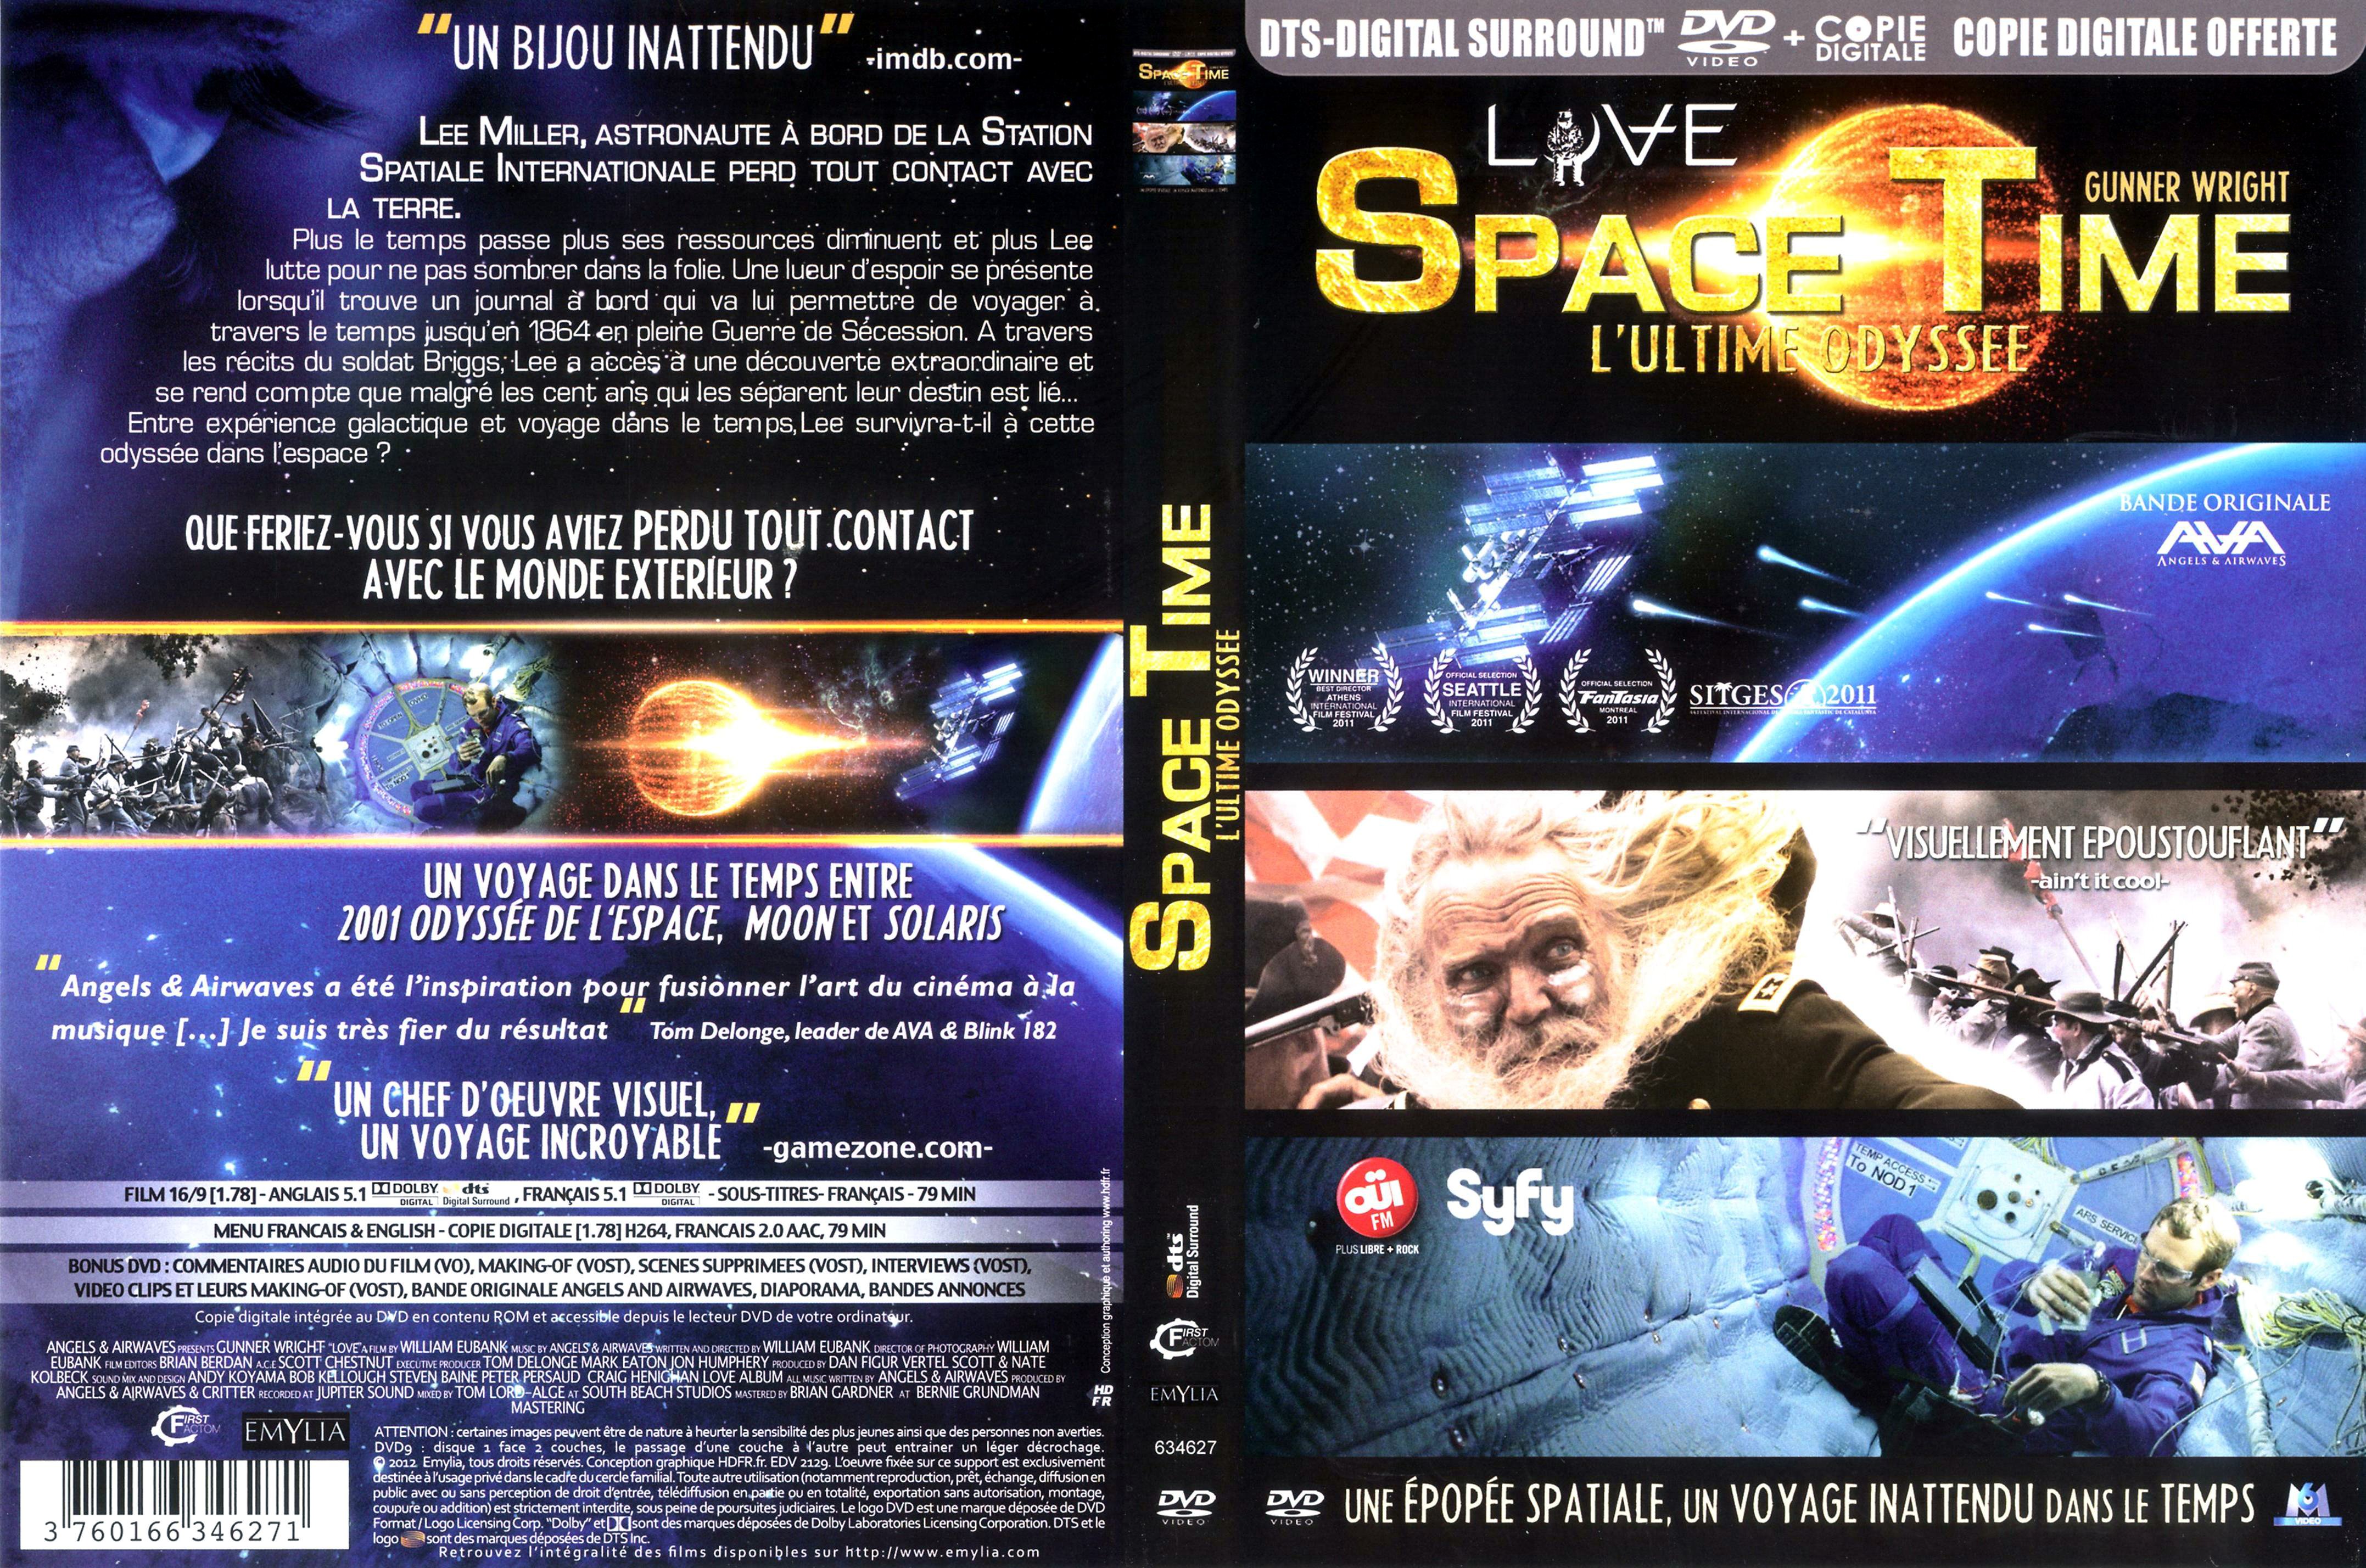 Jaquette DVD Space time - L